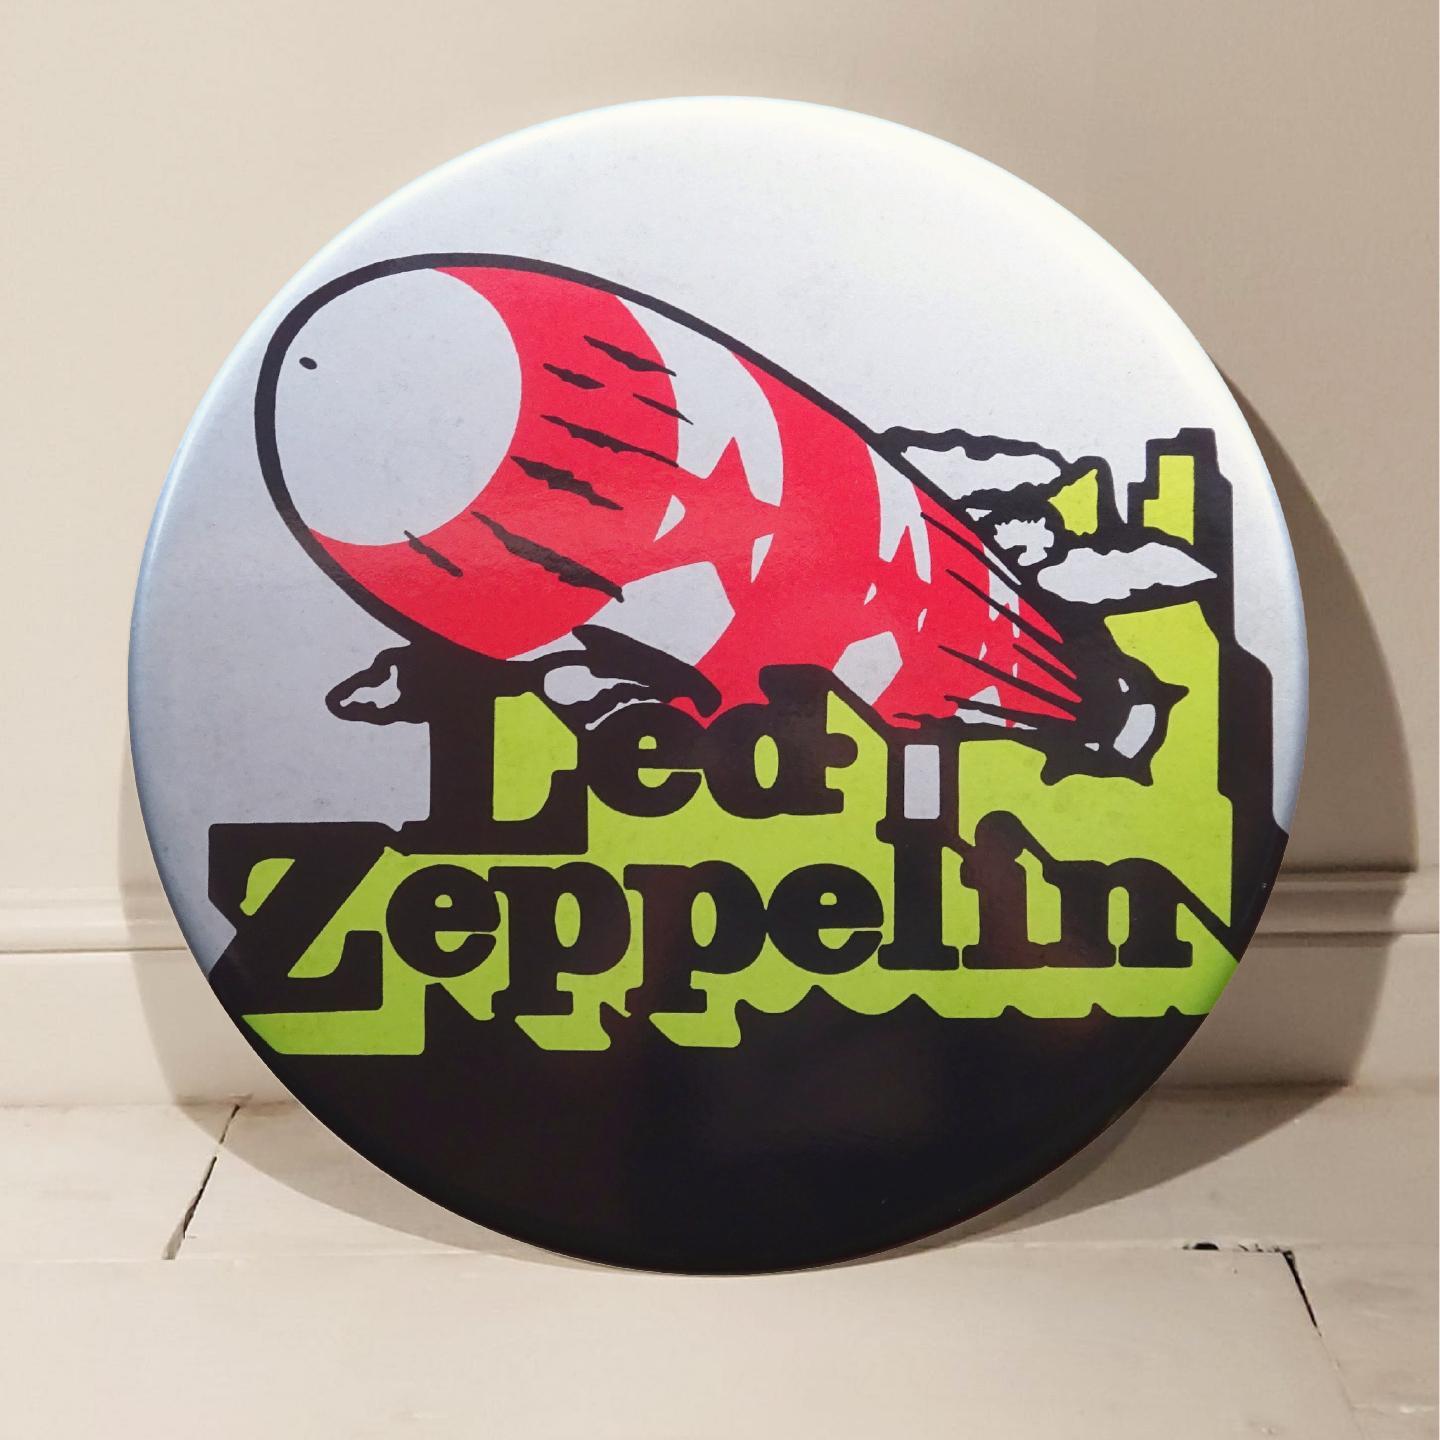 Led Zeppelin (Metallic) Giant Handmade 3D Vintage Button - Art by Tony Dennis